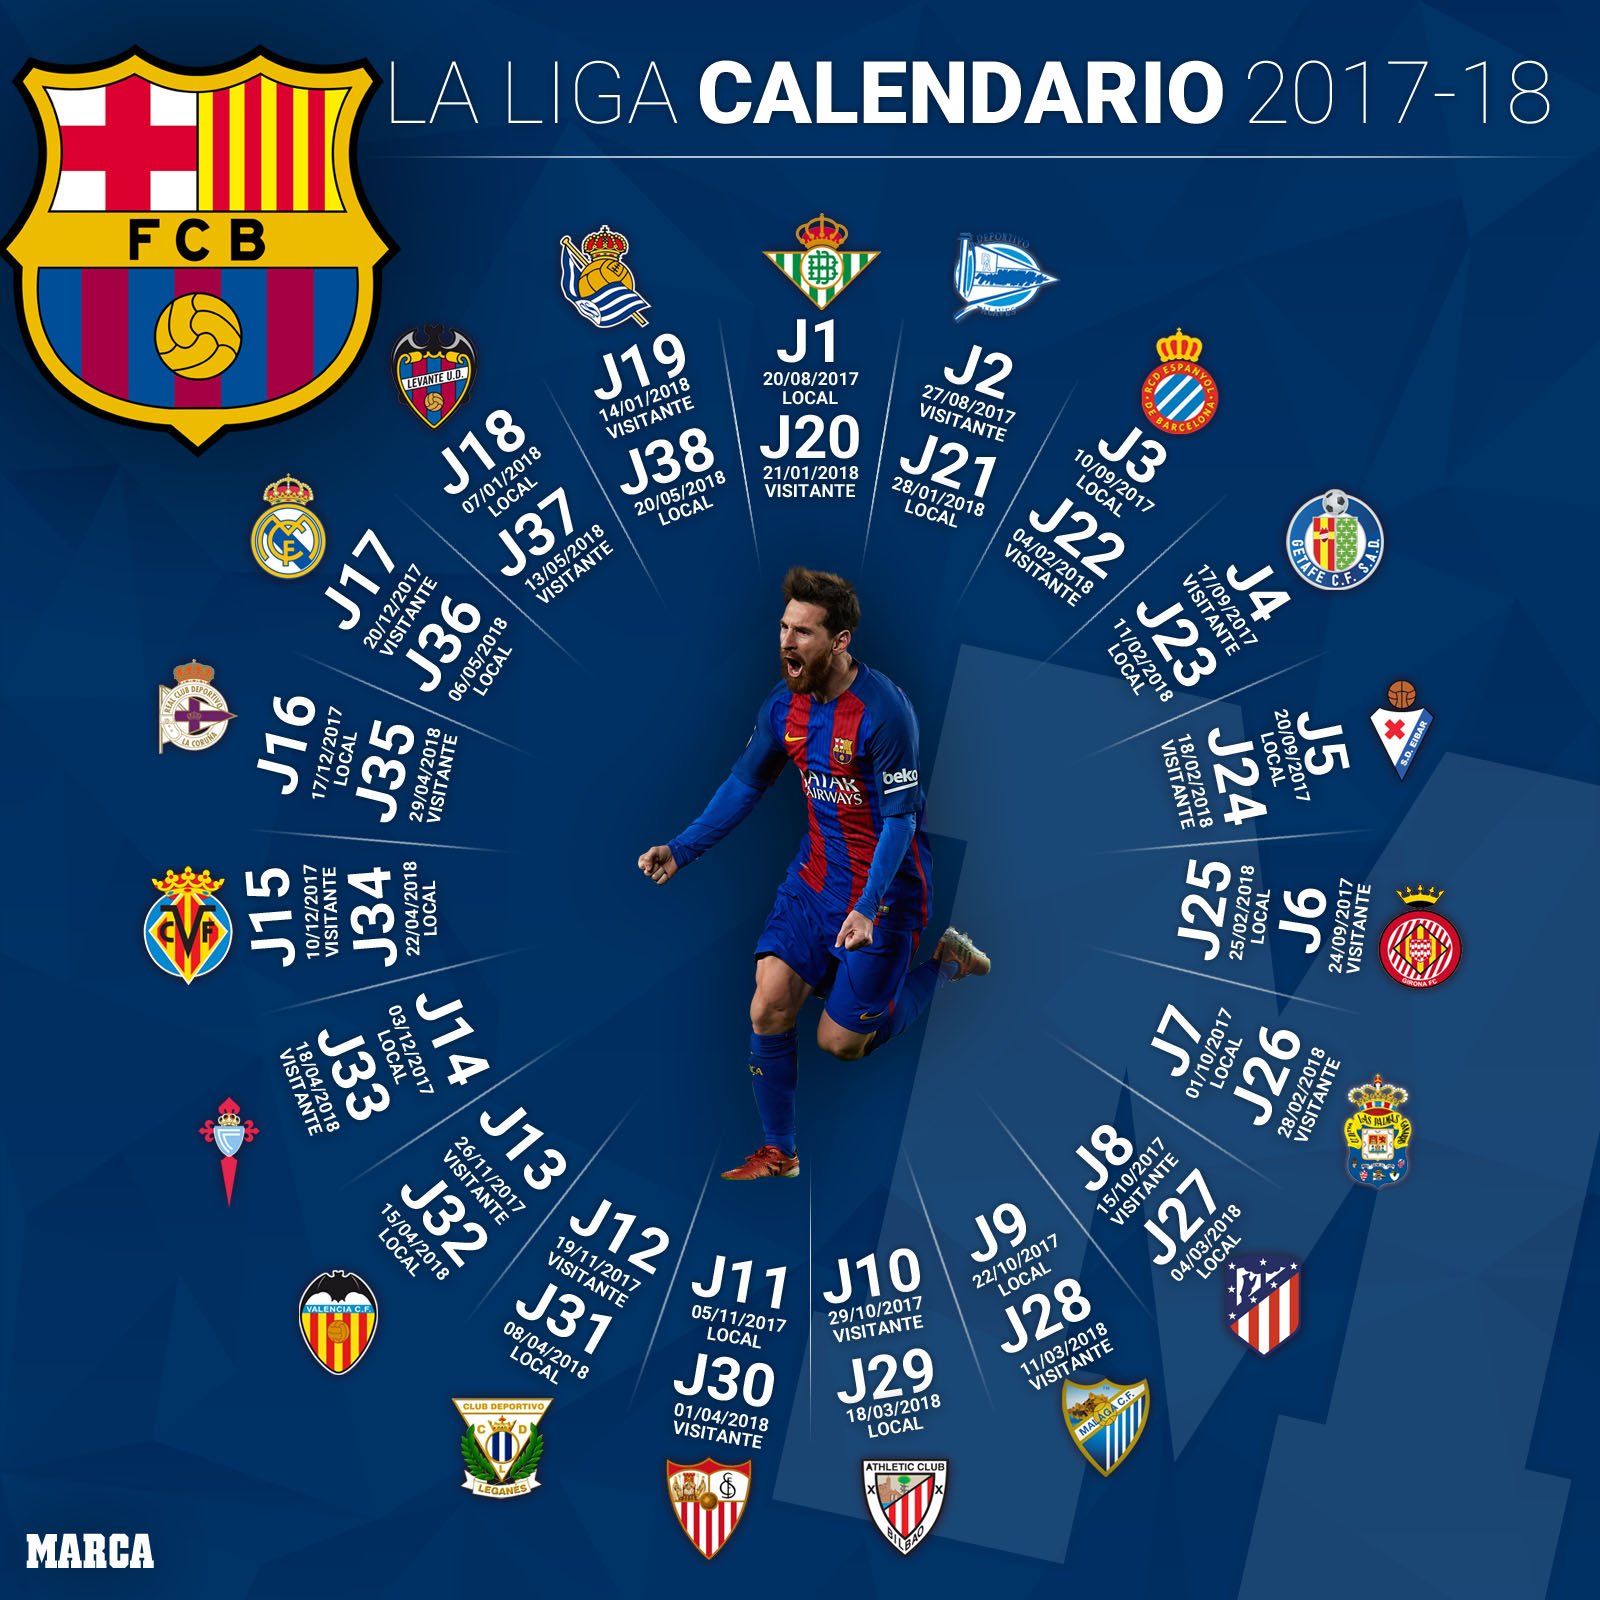 on Twitter: "📌 El calendario de #LaLiga 2017/18 del Barça 📆 https://t.co/Mbhm9cPsrw #SorteoCalendario https://t.co/vHrWIanOaW" / Twitter